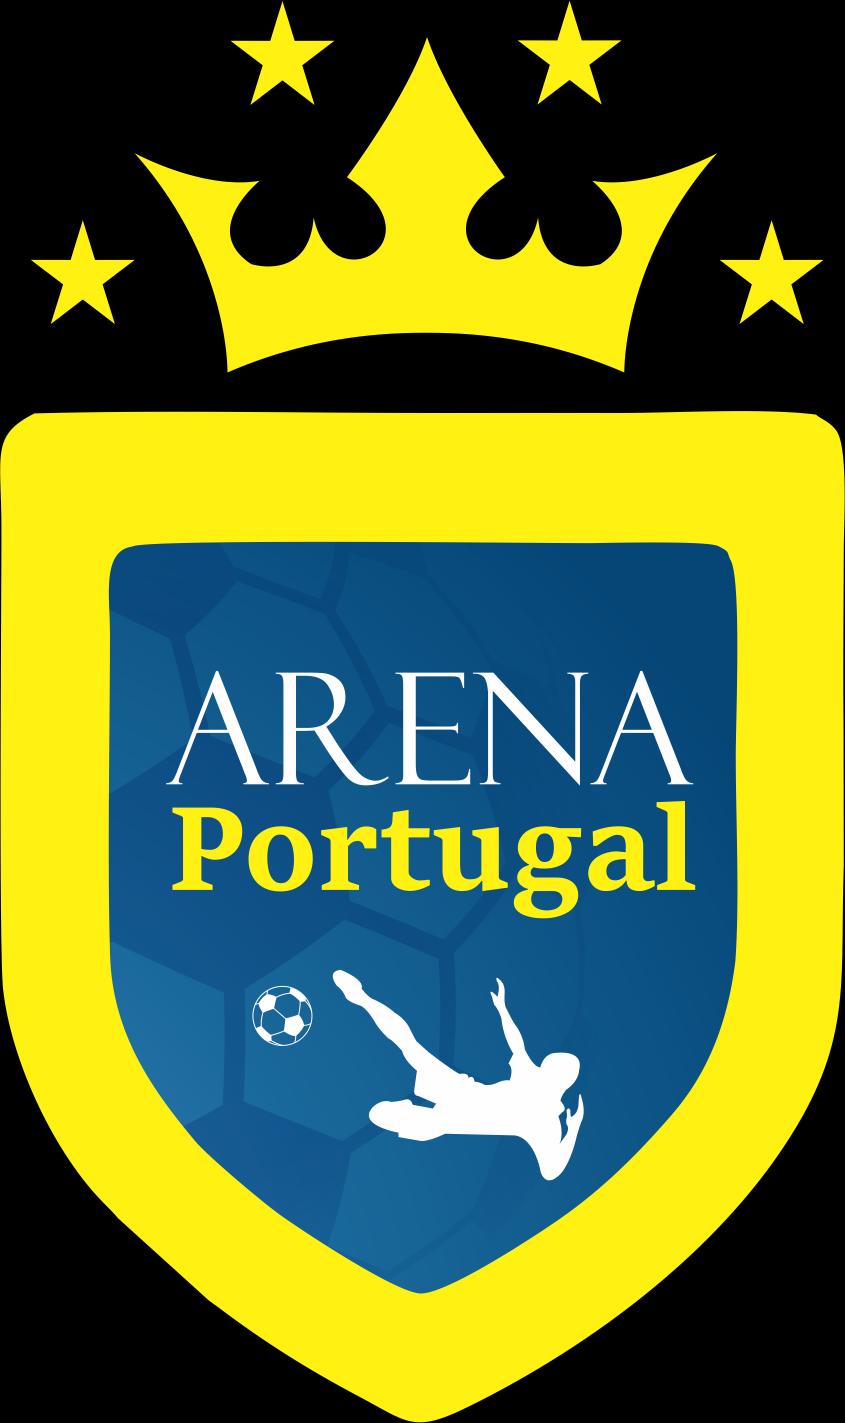 ARENA PORTUGAL